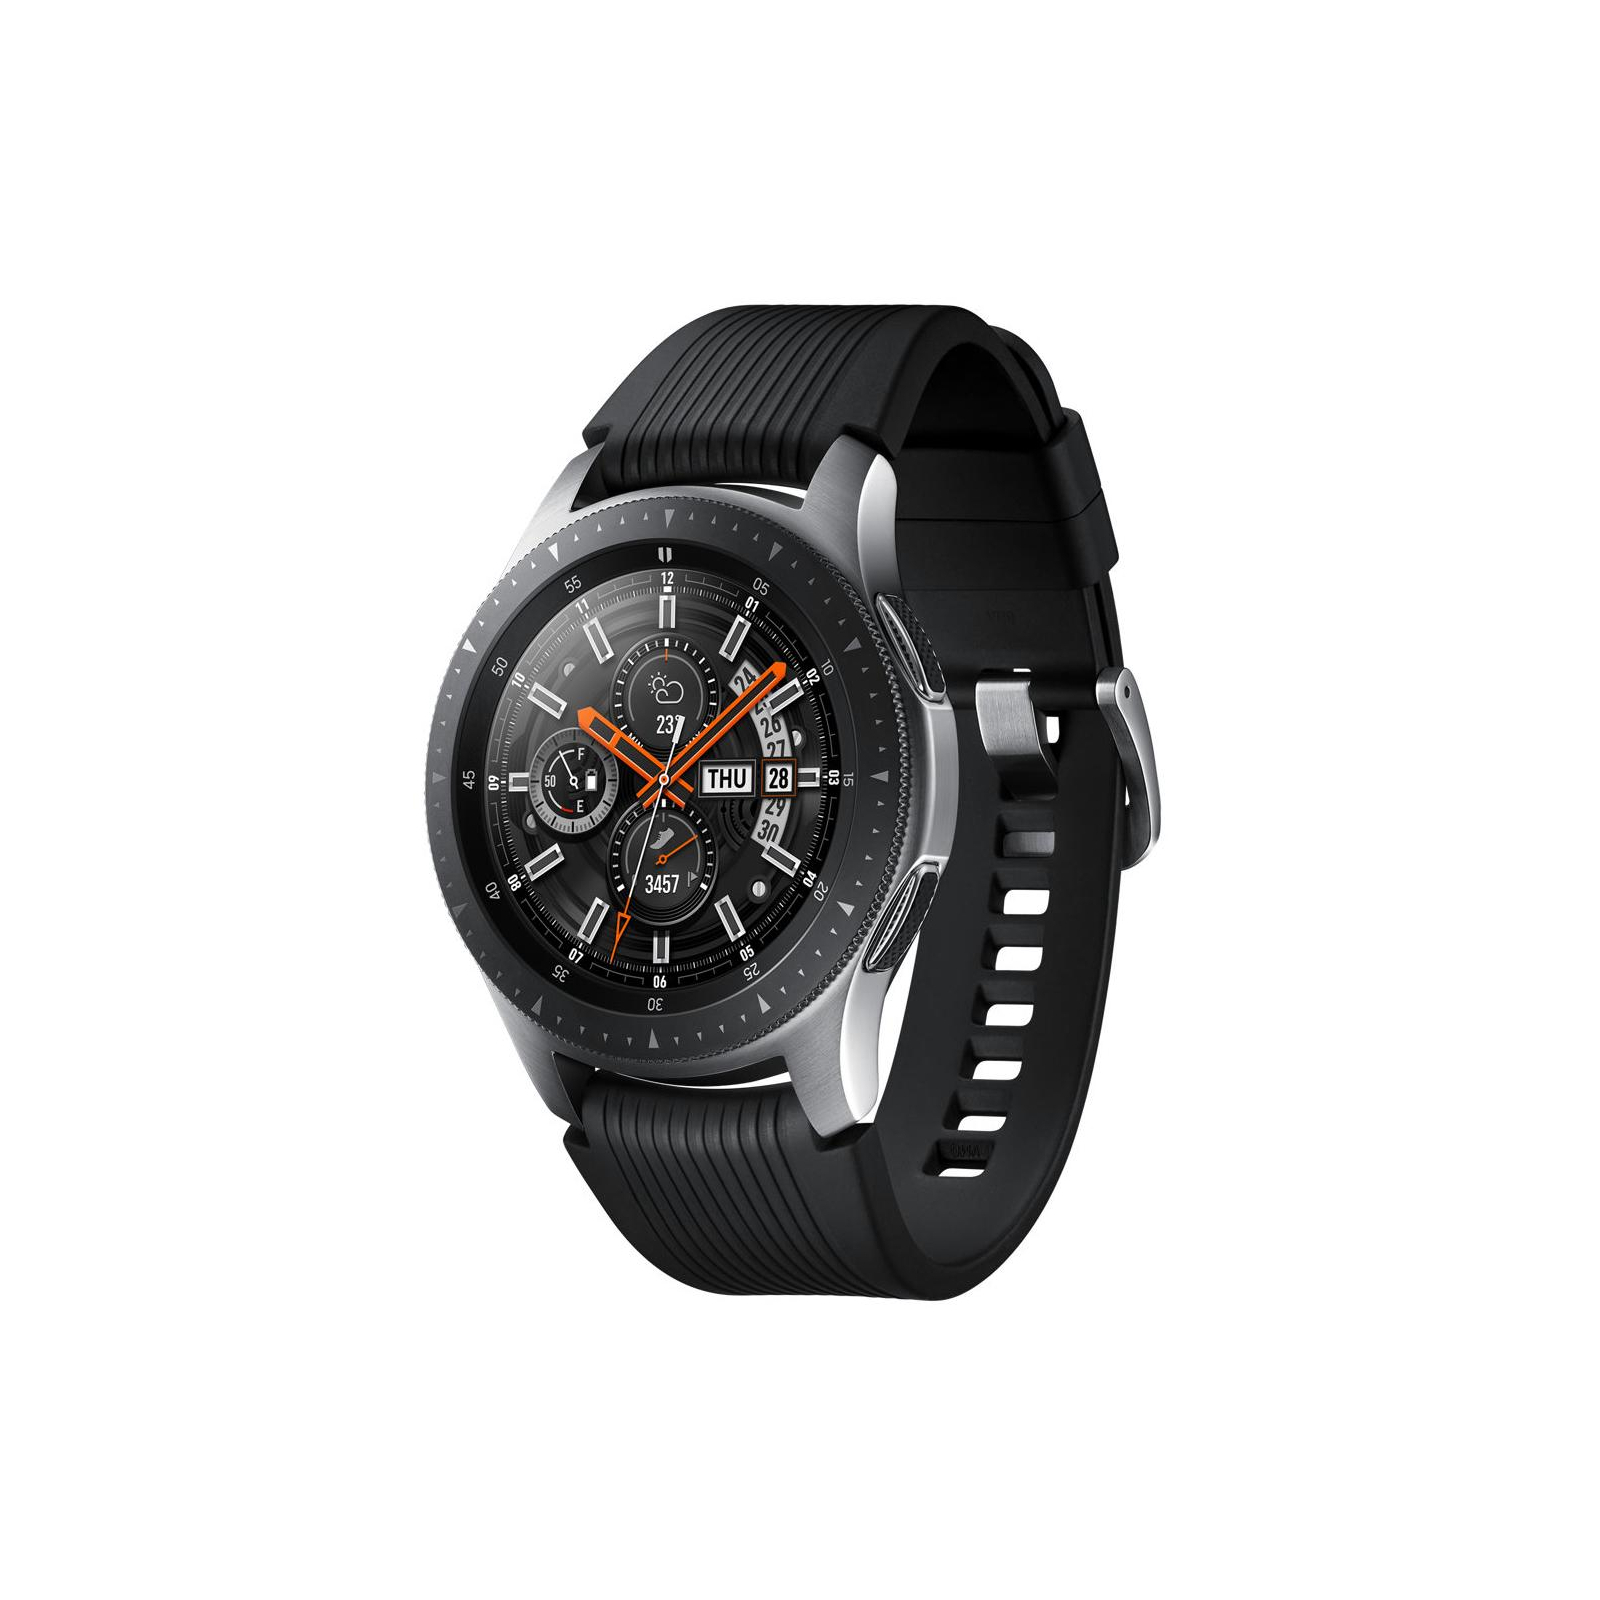 Смарт-часы Samsung SM-R800 (Galaxy Watch 46mm) Silver (SM-R800NZSASEK) изображение 2